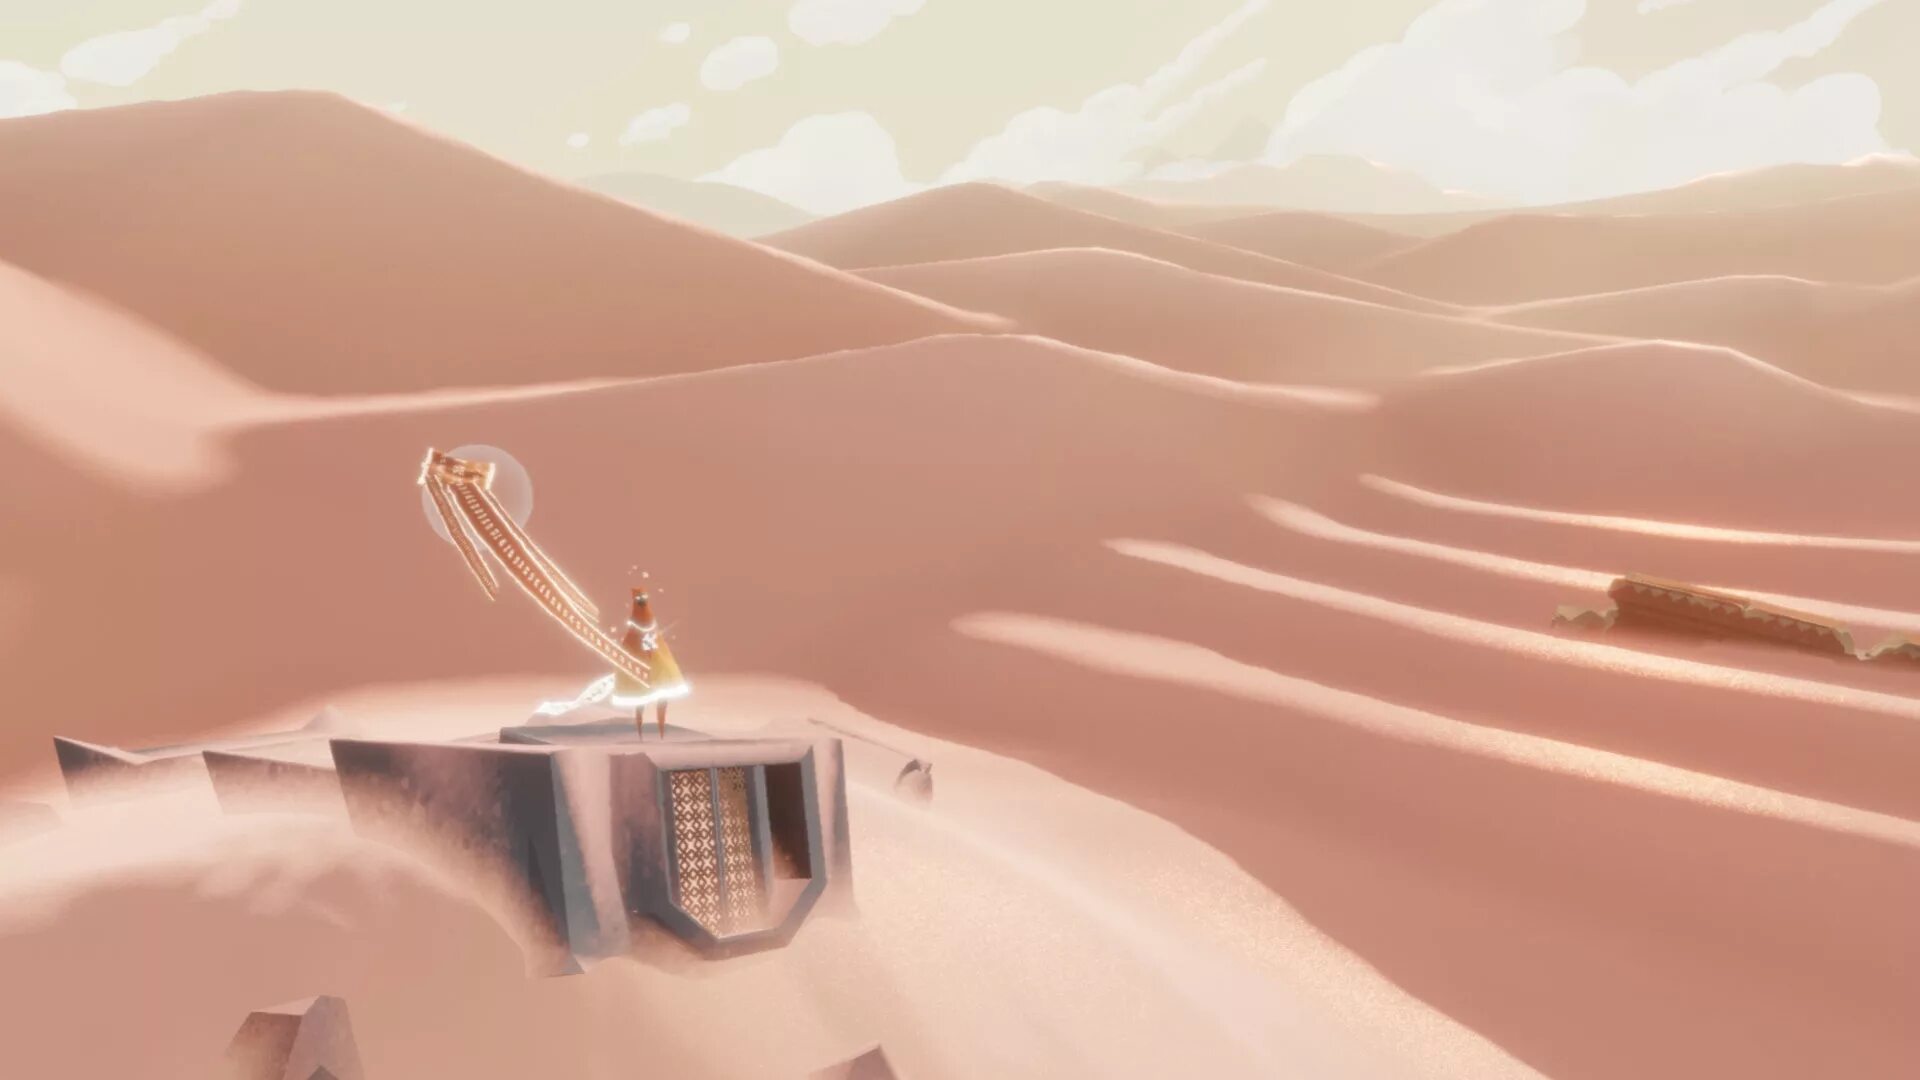 Journey цена. Journey пустыня ps4 Скриншоты thatgamecompany. Journey игра. Journey (игра, 2012). Игра про путешествие по пустыне.